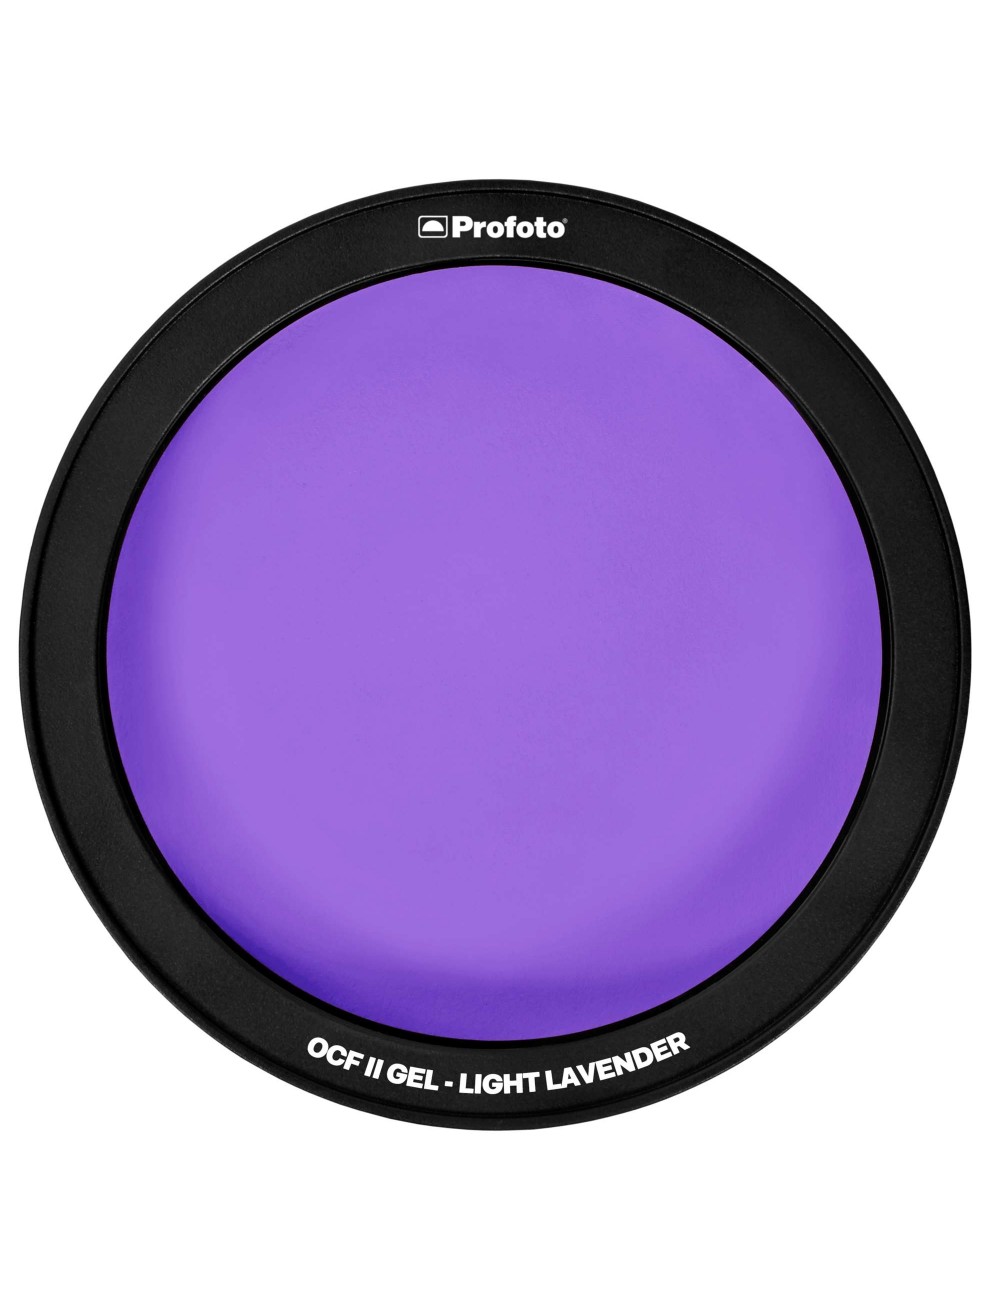 PROFOTO OCF II Gel-Light Lavender